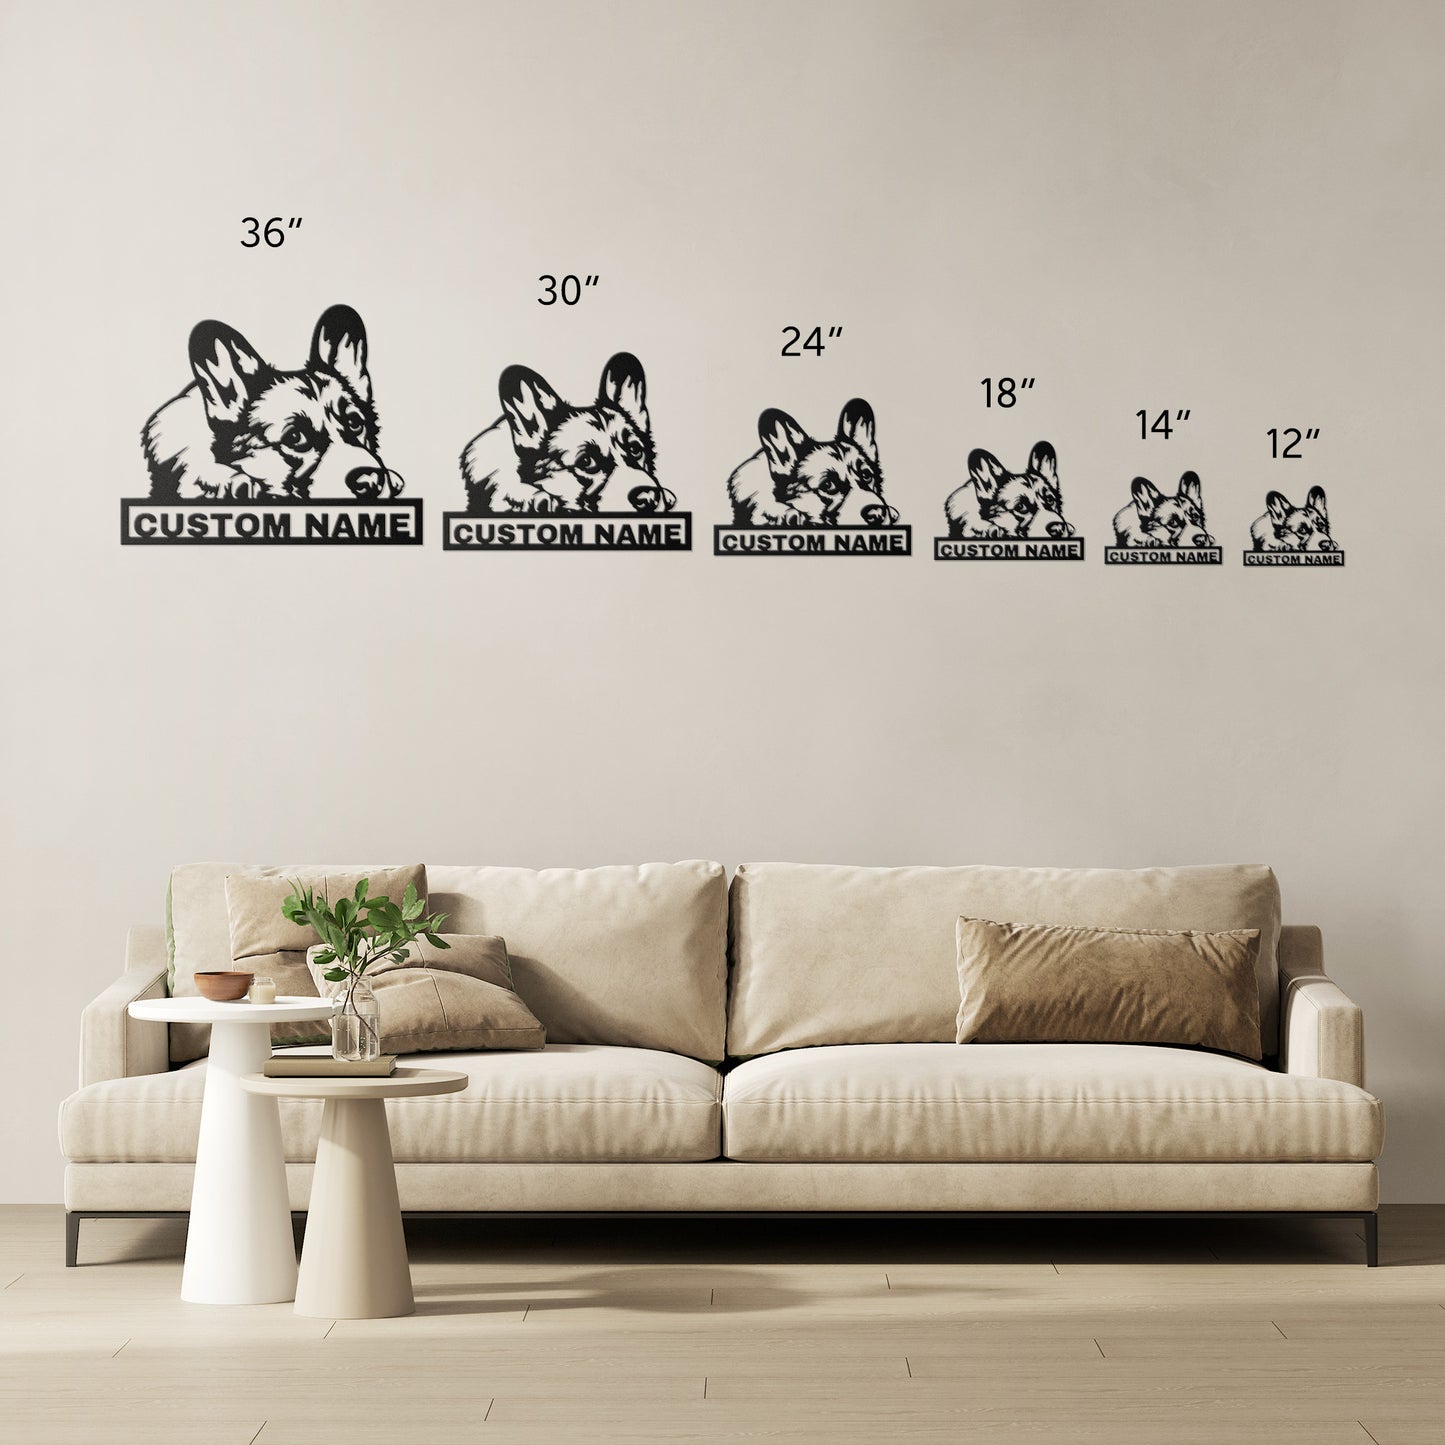 Personalized Corgi Dog Metal Sign - Corgi Custom Name Wall Decor, Metal Signs Customized Outdoor Indoor, Wall Art Gift For Corgi Dog Lover